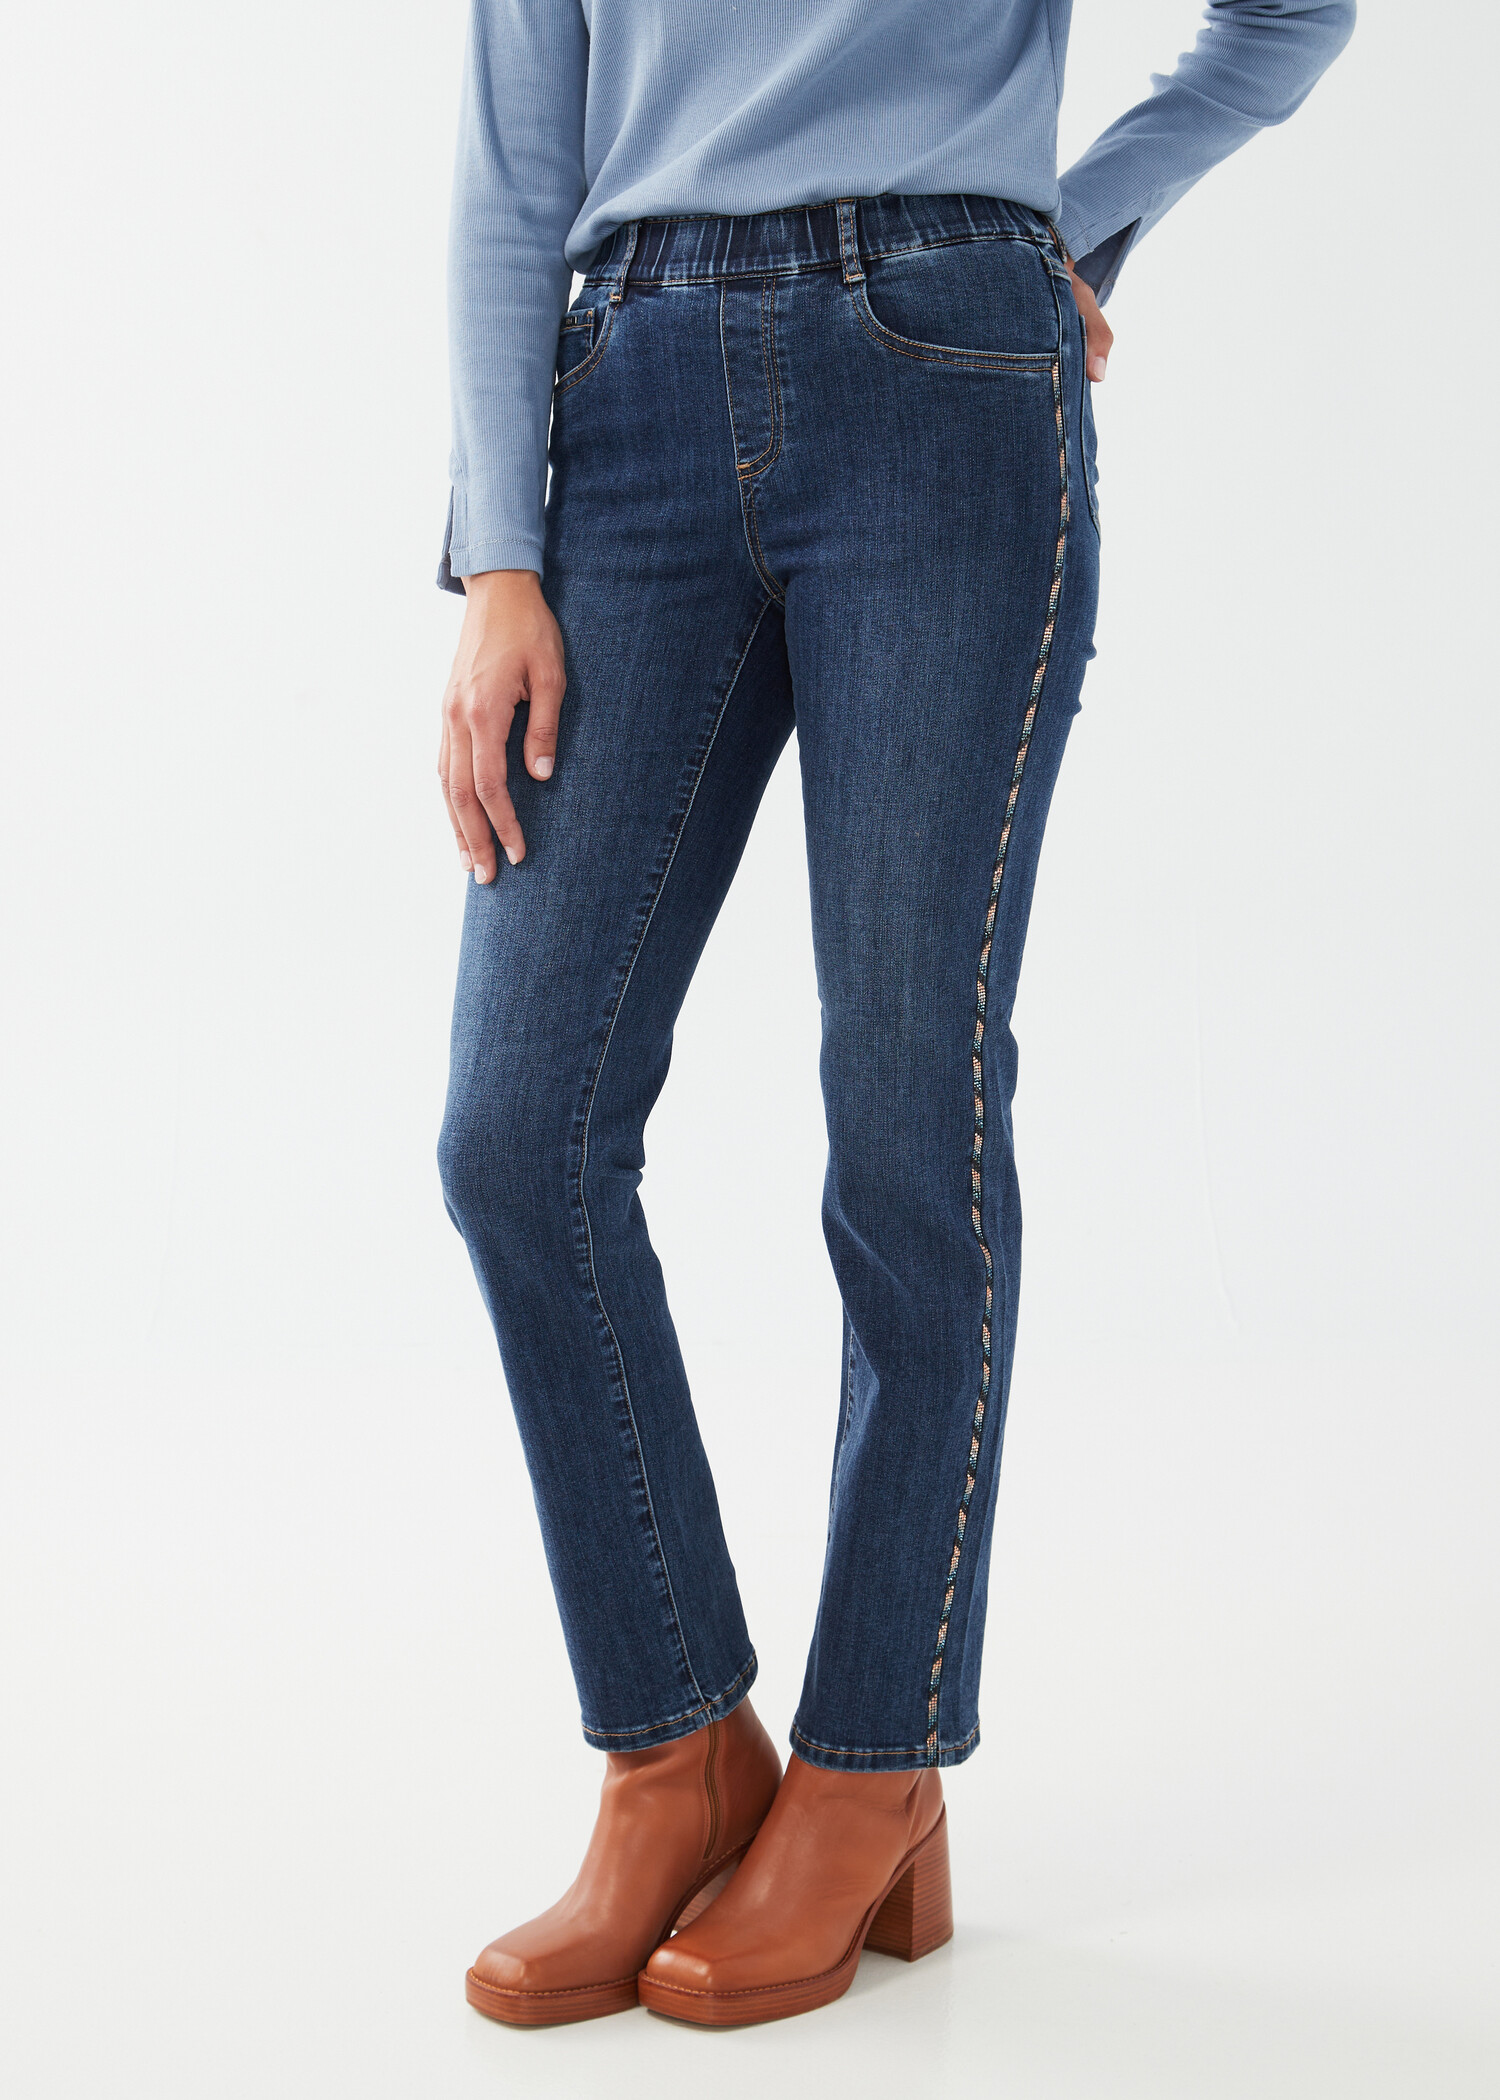 https://cdn.shoplightspeed.com/shops/643252/files/57232447/1500x4000x3/french-dressing-jeans-french-dressing-pull-on-stra.jpg